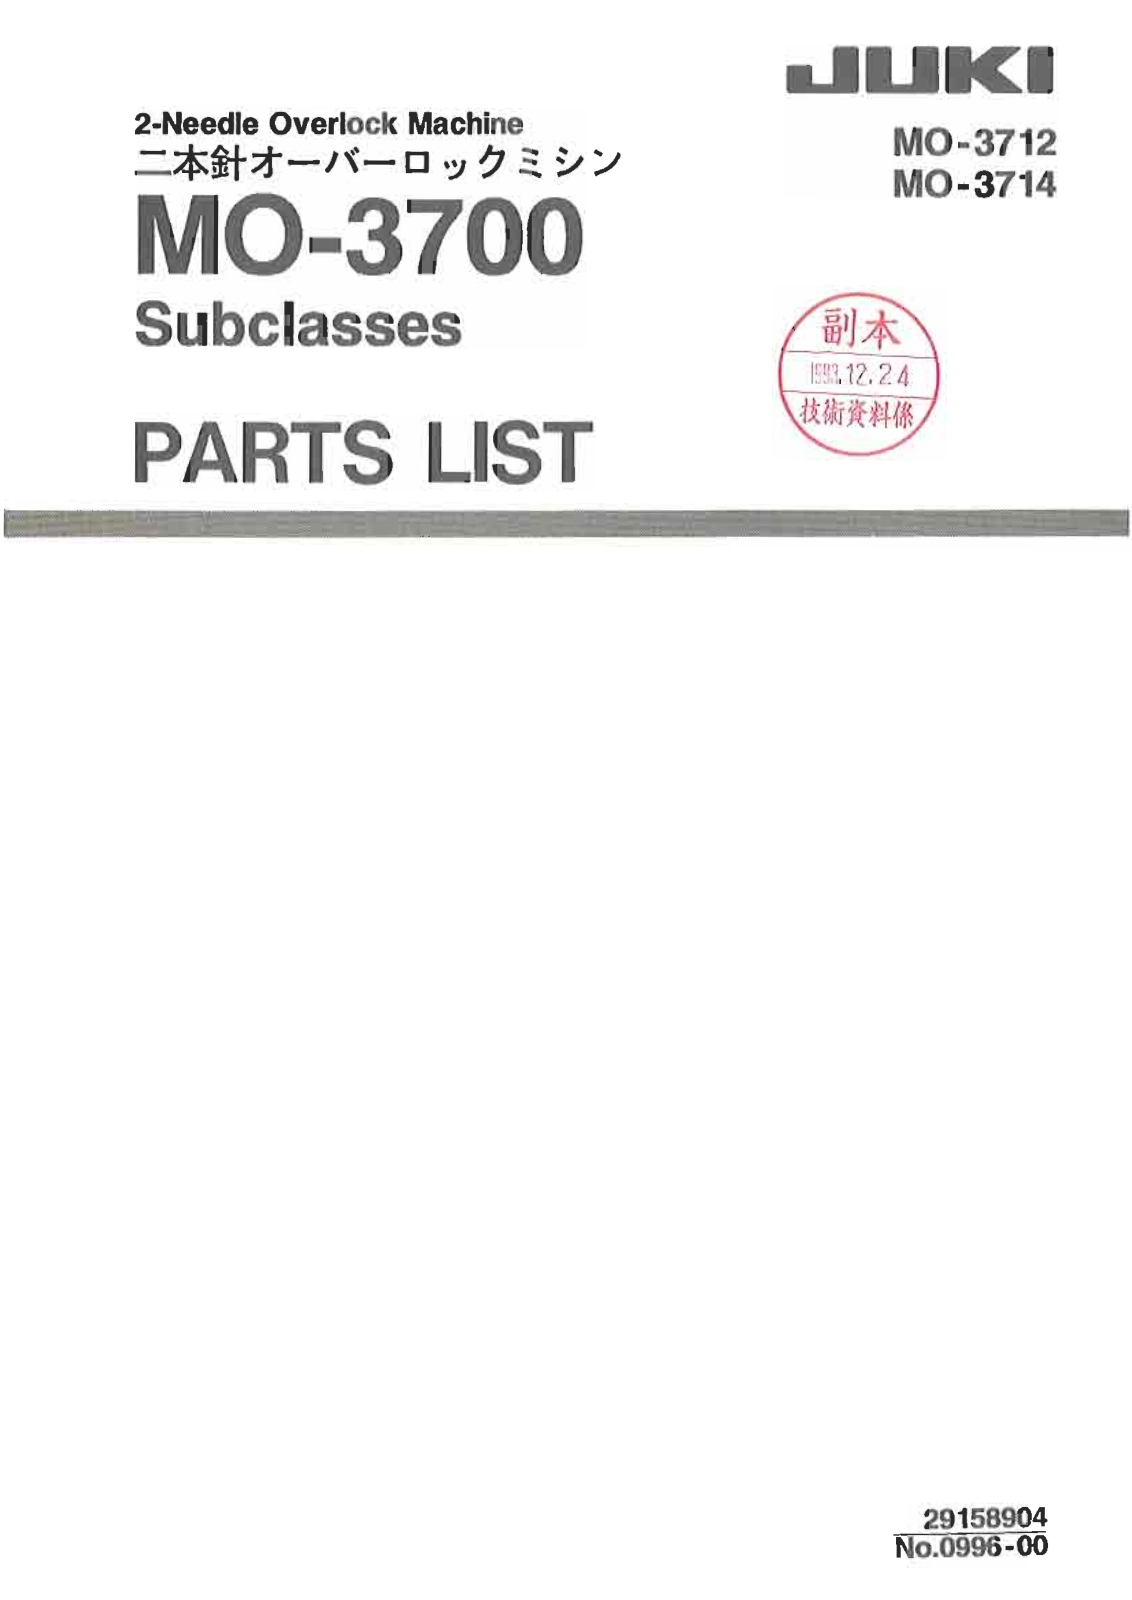 Juki MO-3712, MOG-3714 Parts List